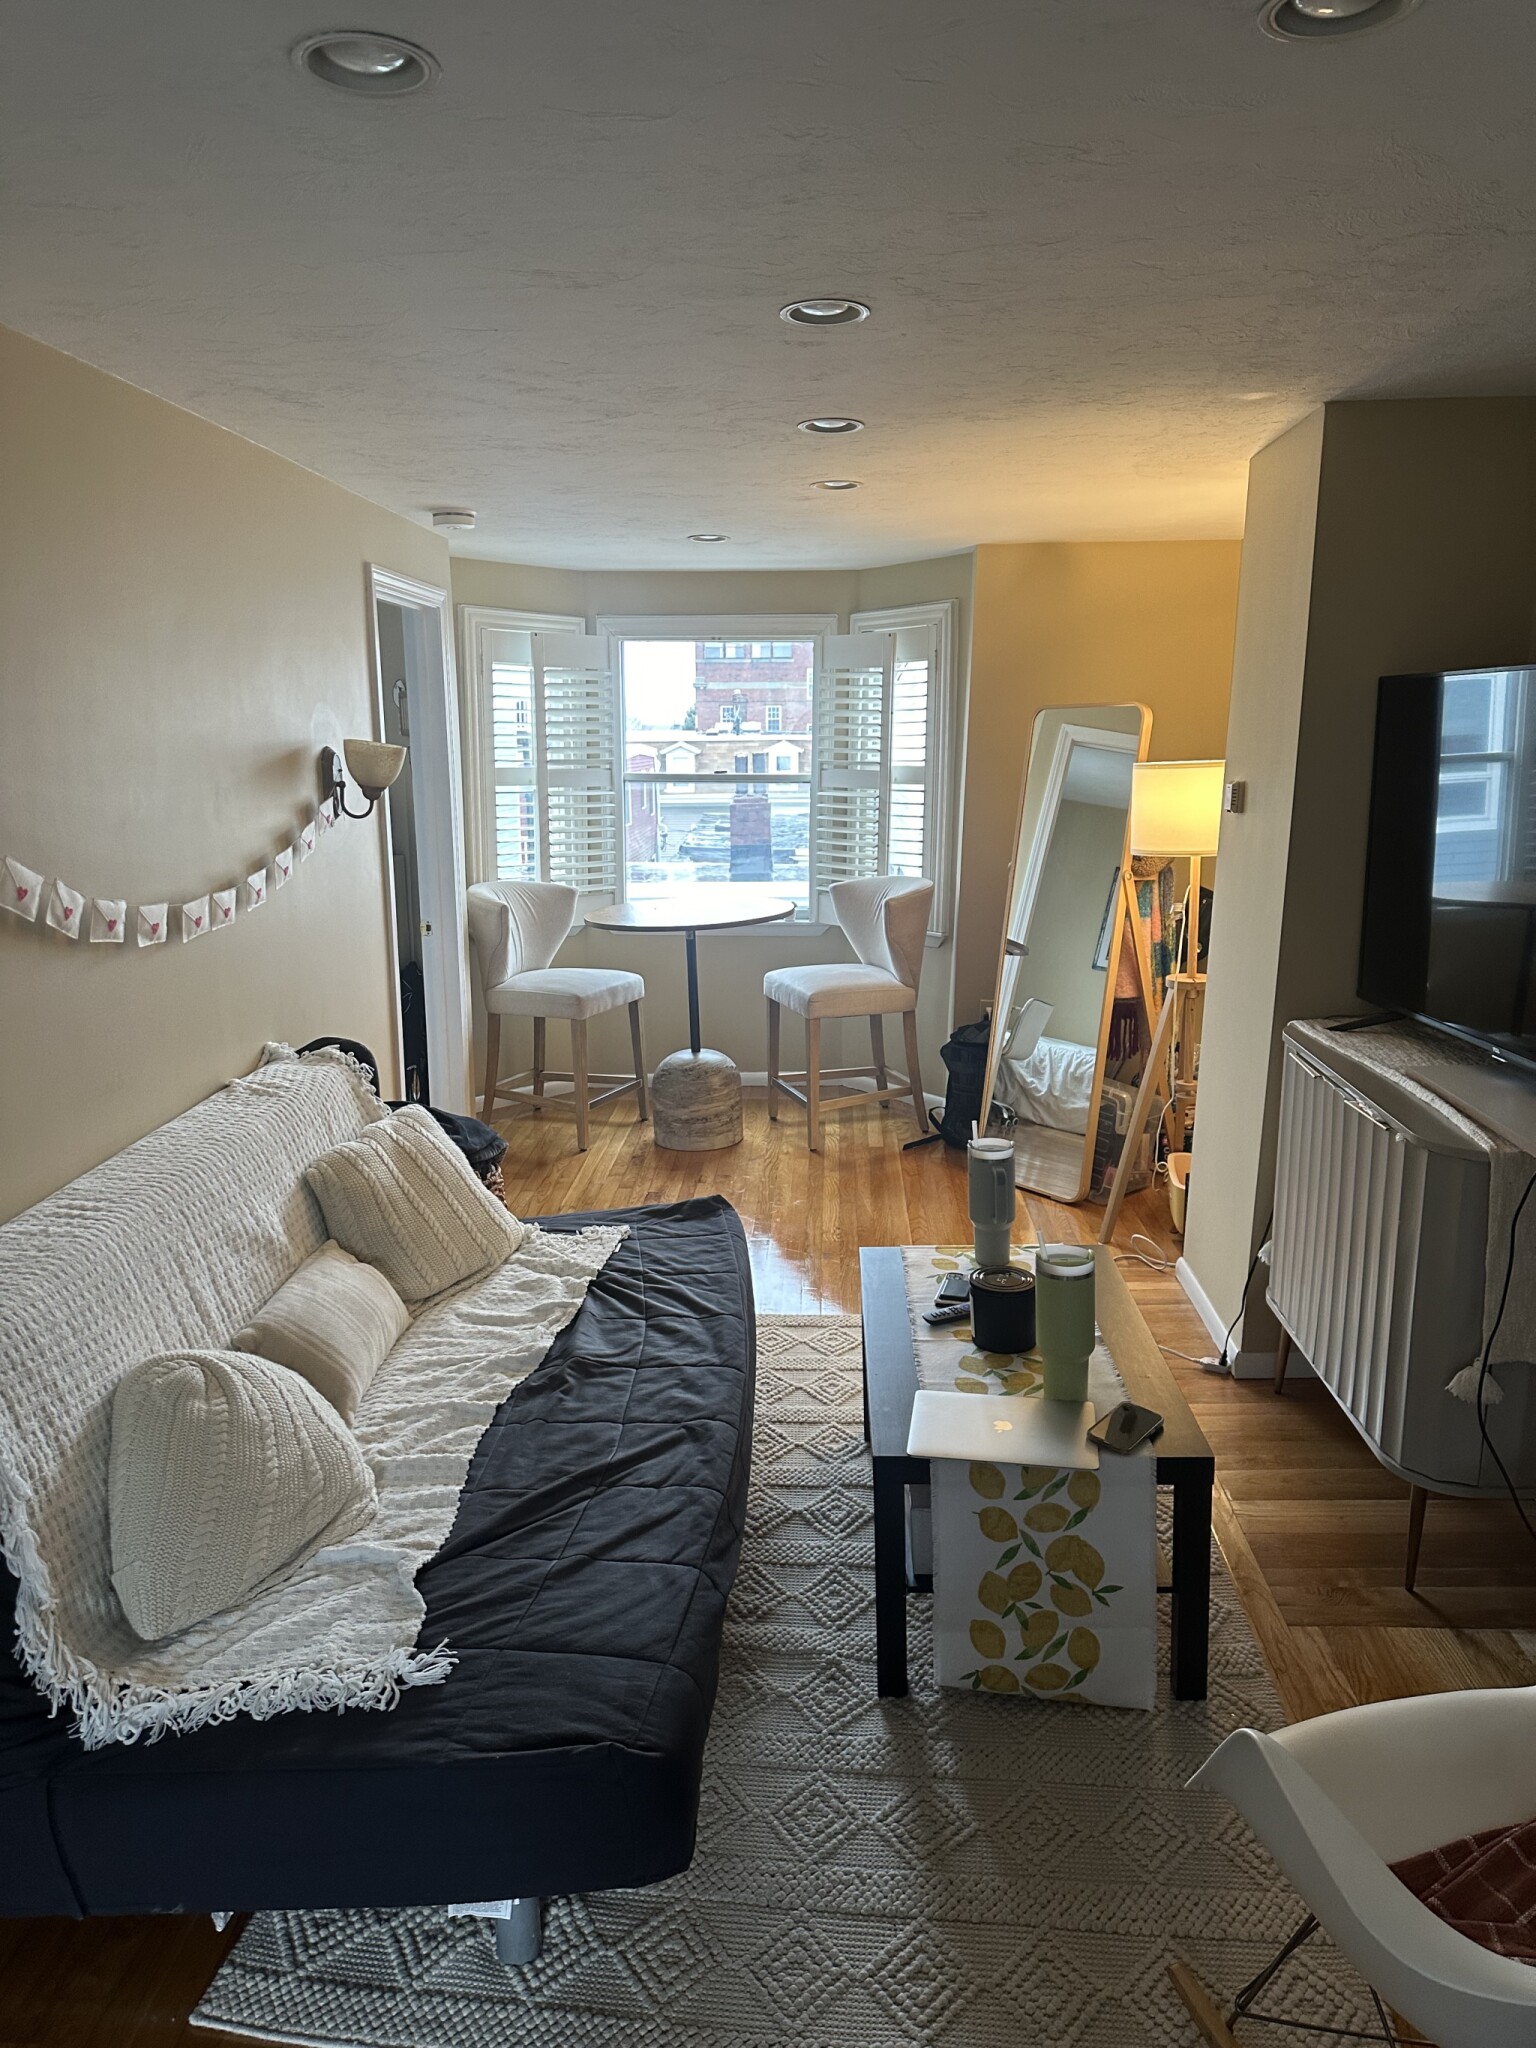 Photos of apartment on Grimes St.,Boston MA 02127